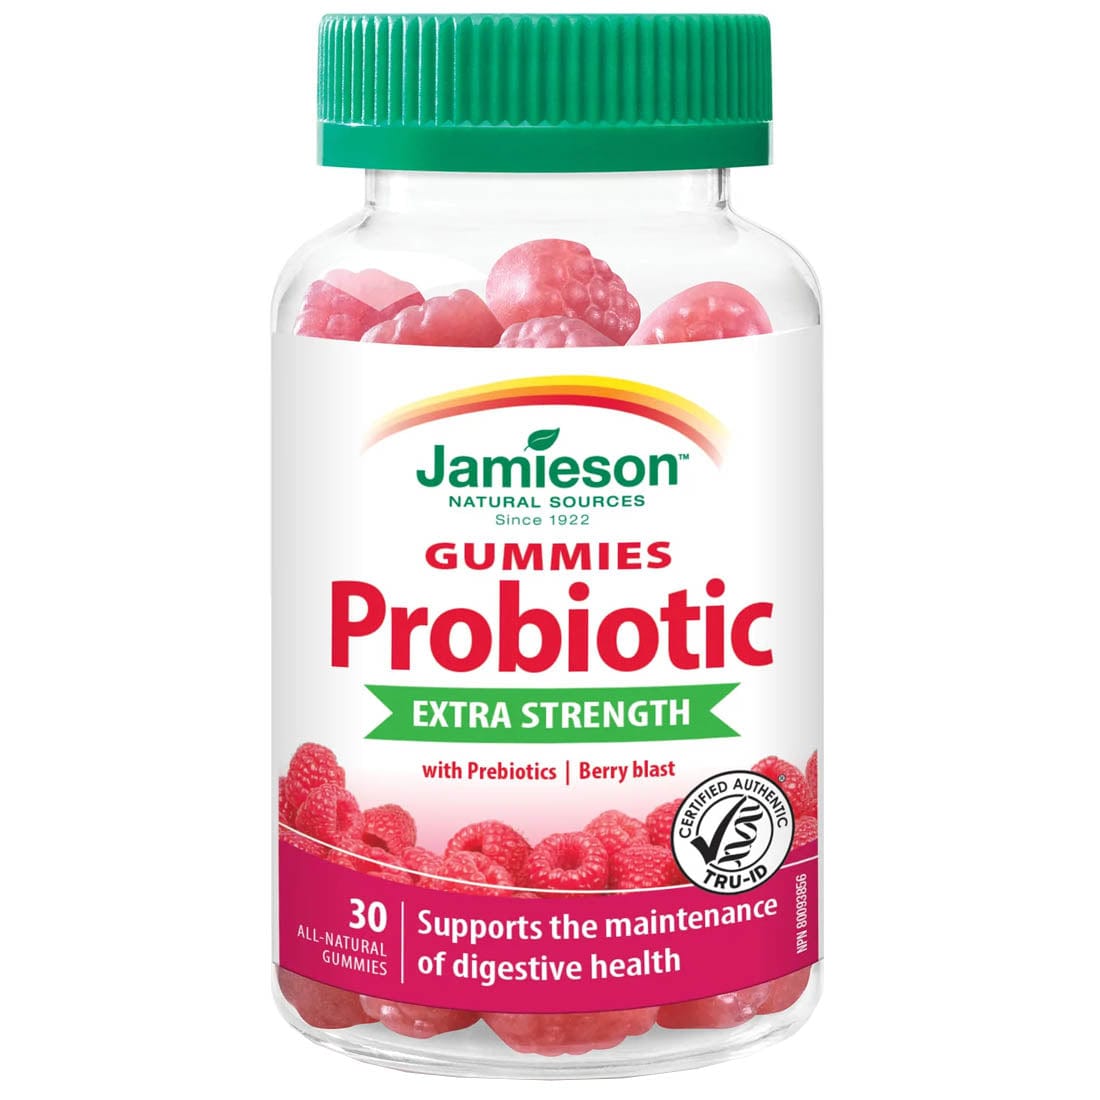 Jamieson Extra Strength Probiotic Gummies